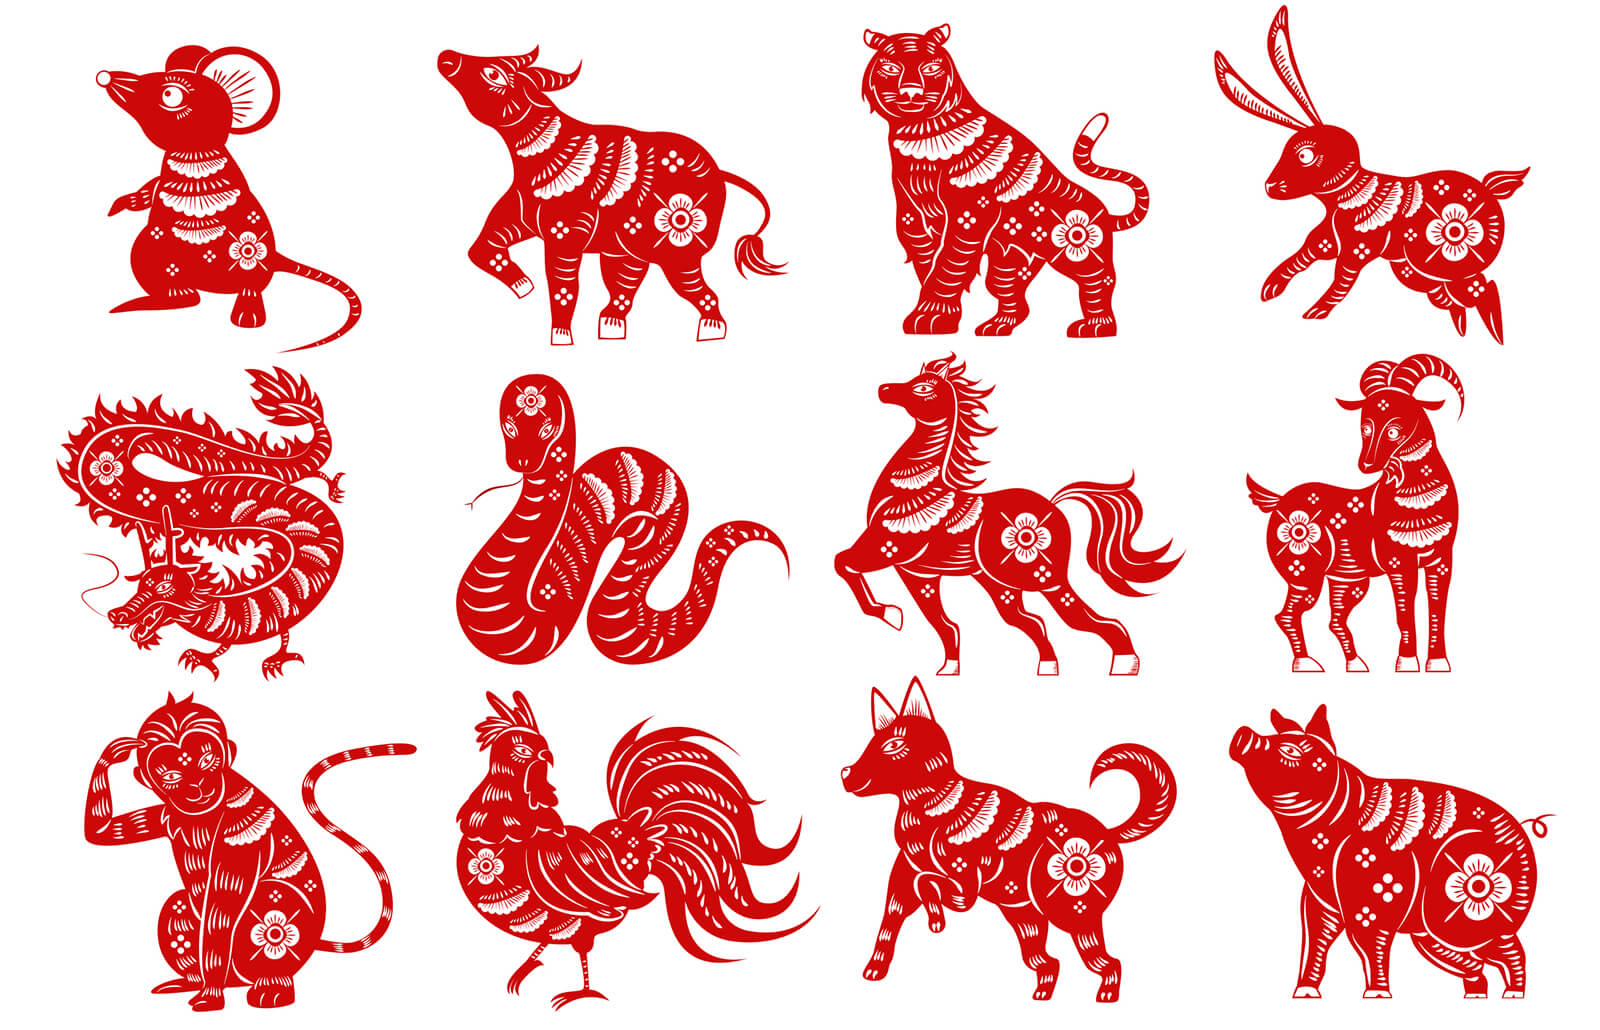 chinese zodiac years compatibility